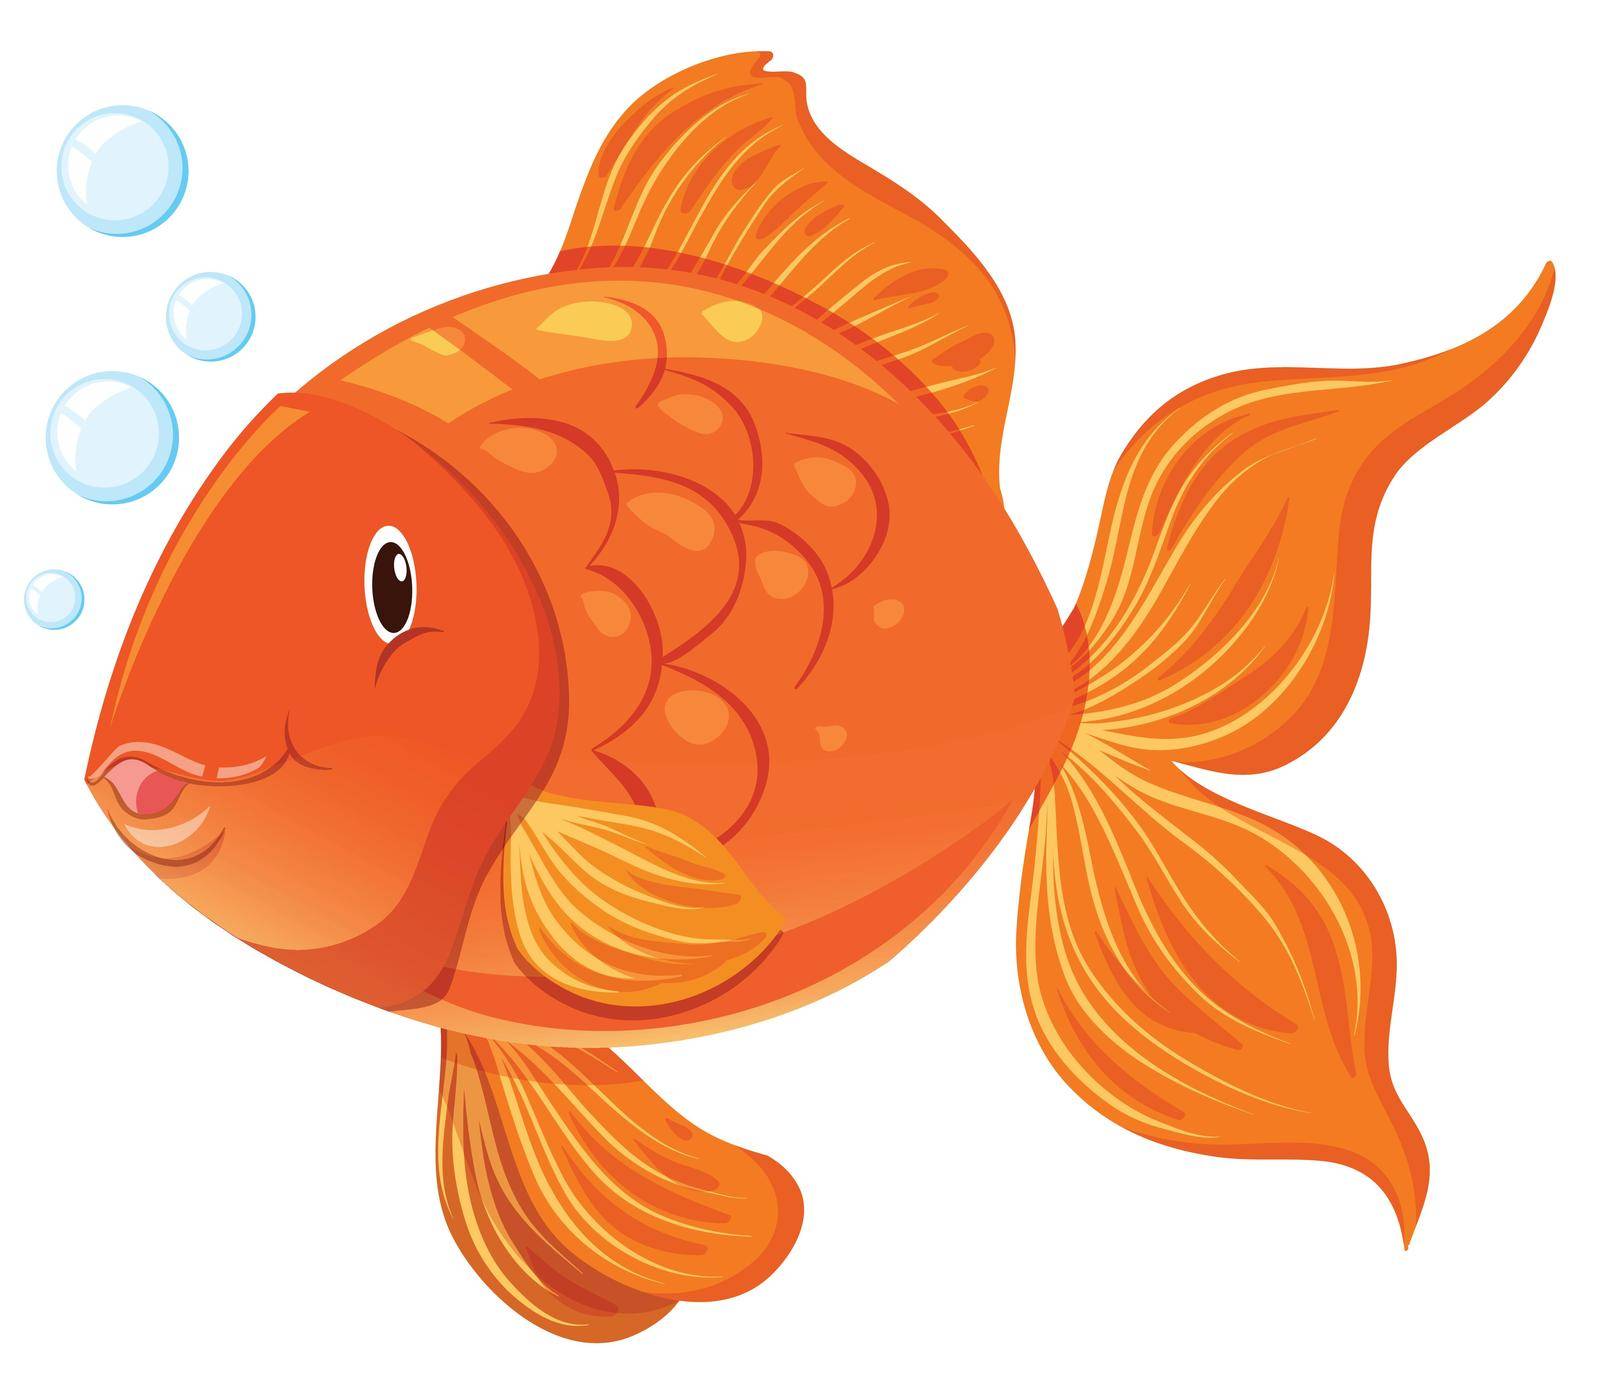 Goldfish with happy face illustration